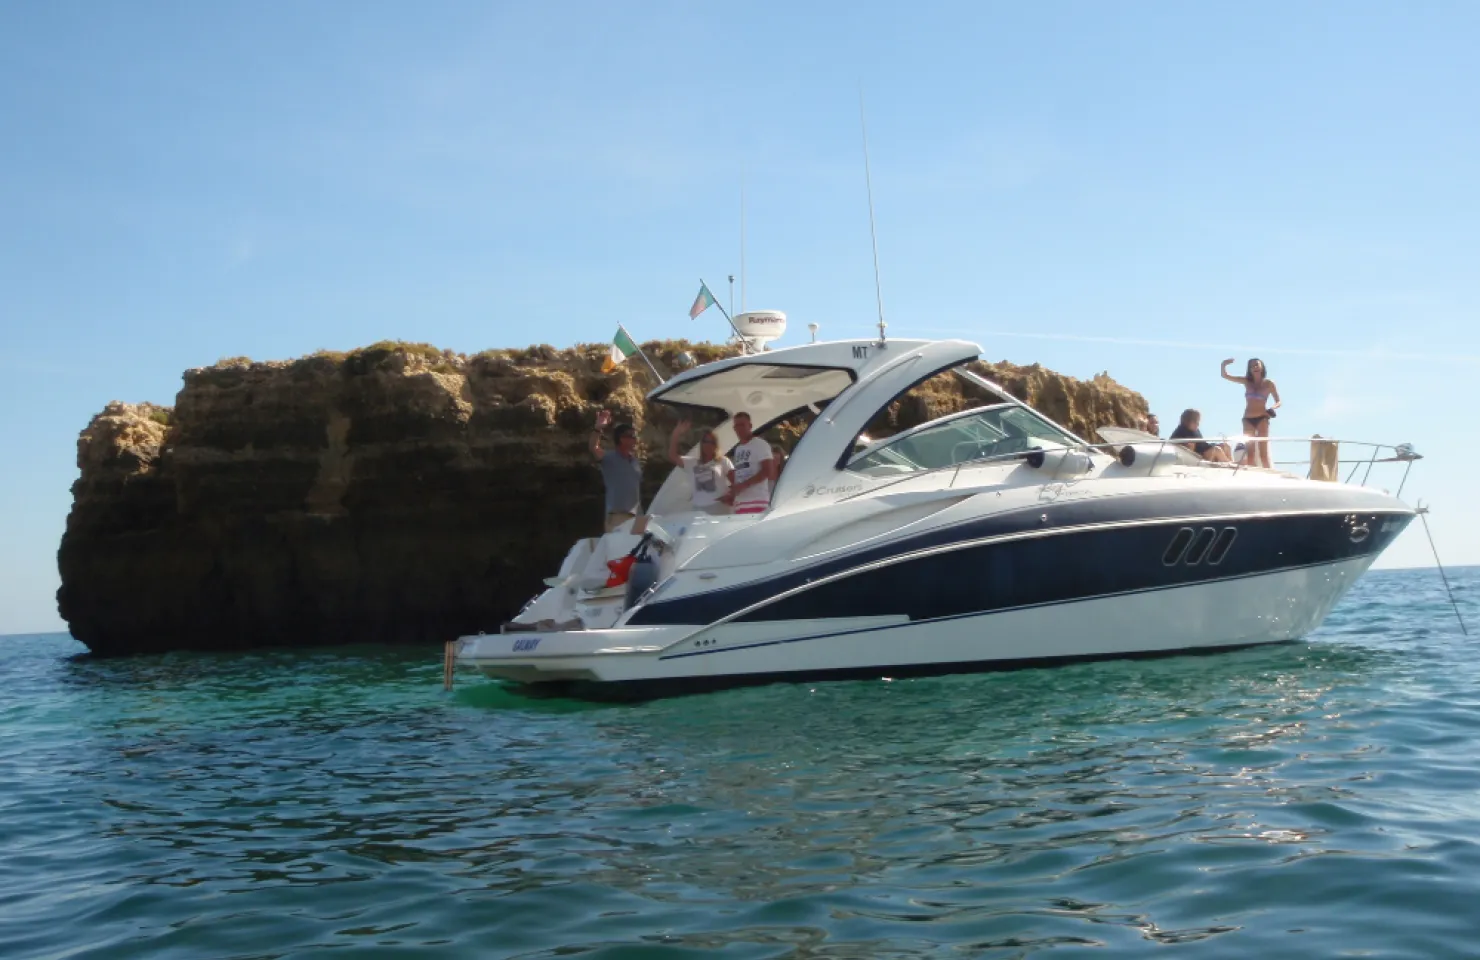 Algarve Majestic Cruises Vilamoura - Algarve Boat Trips and Tours - 